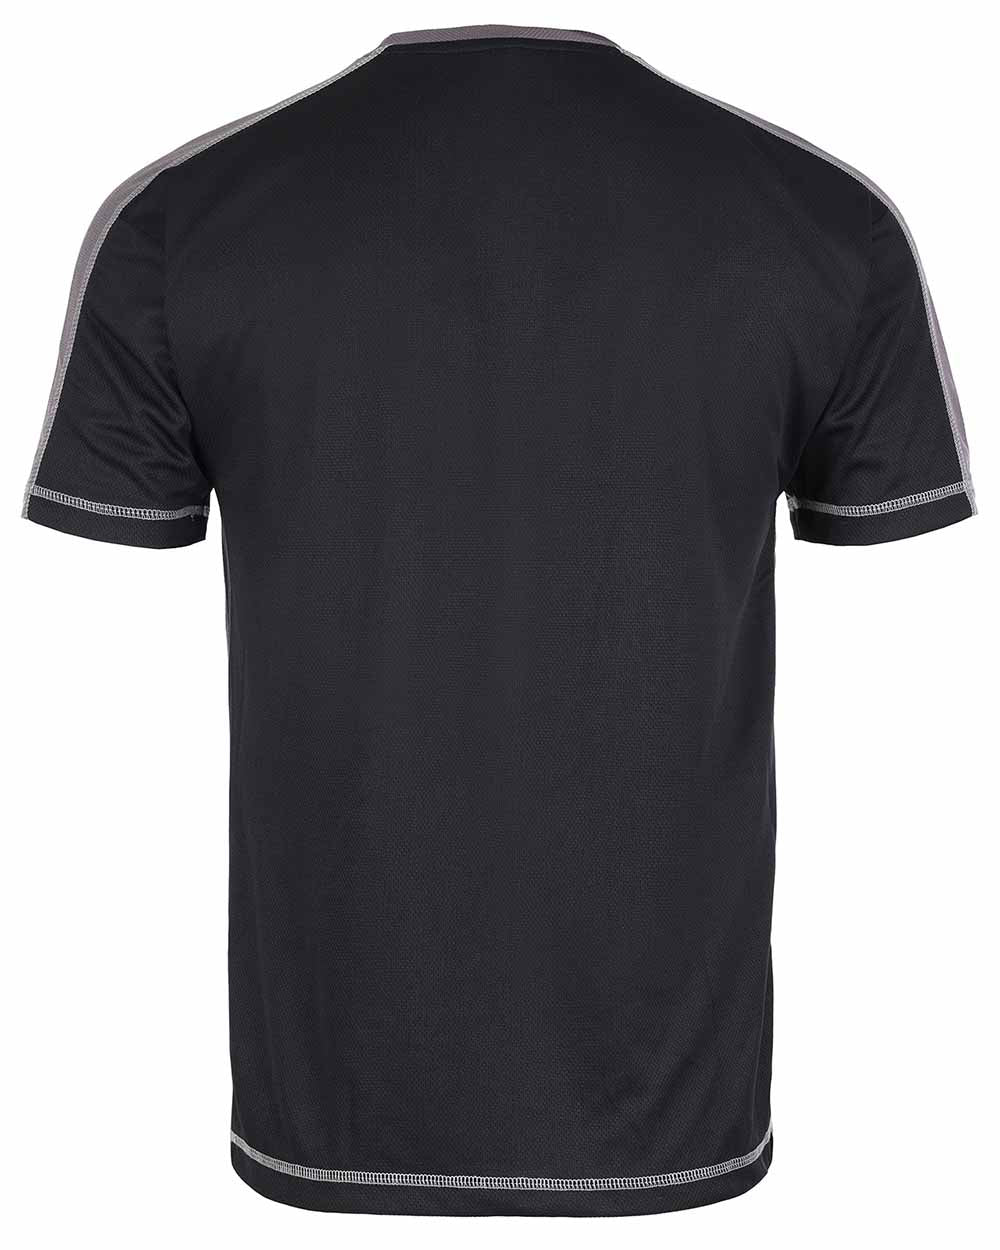 Black Coloured TuffStuff Elite T-Shirt On A White Background 